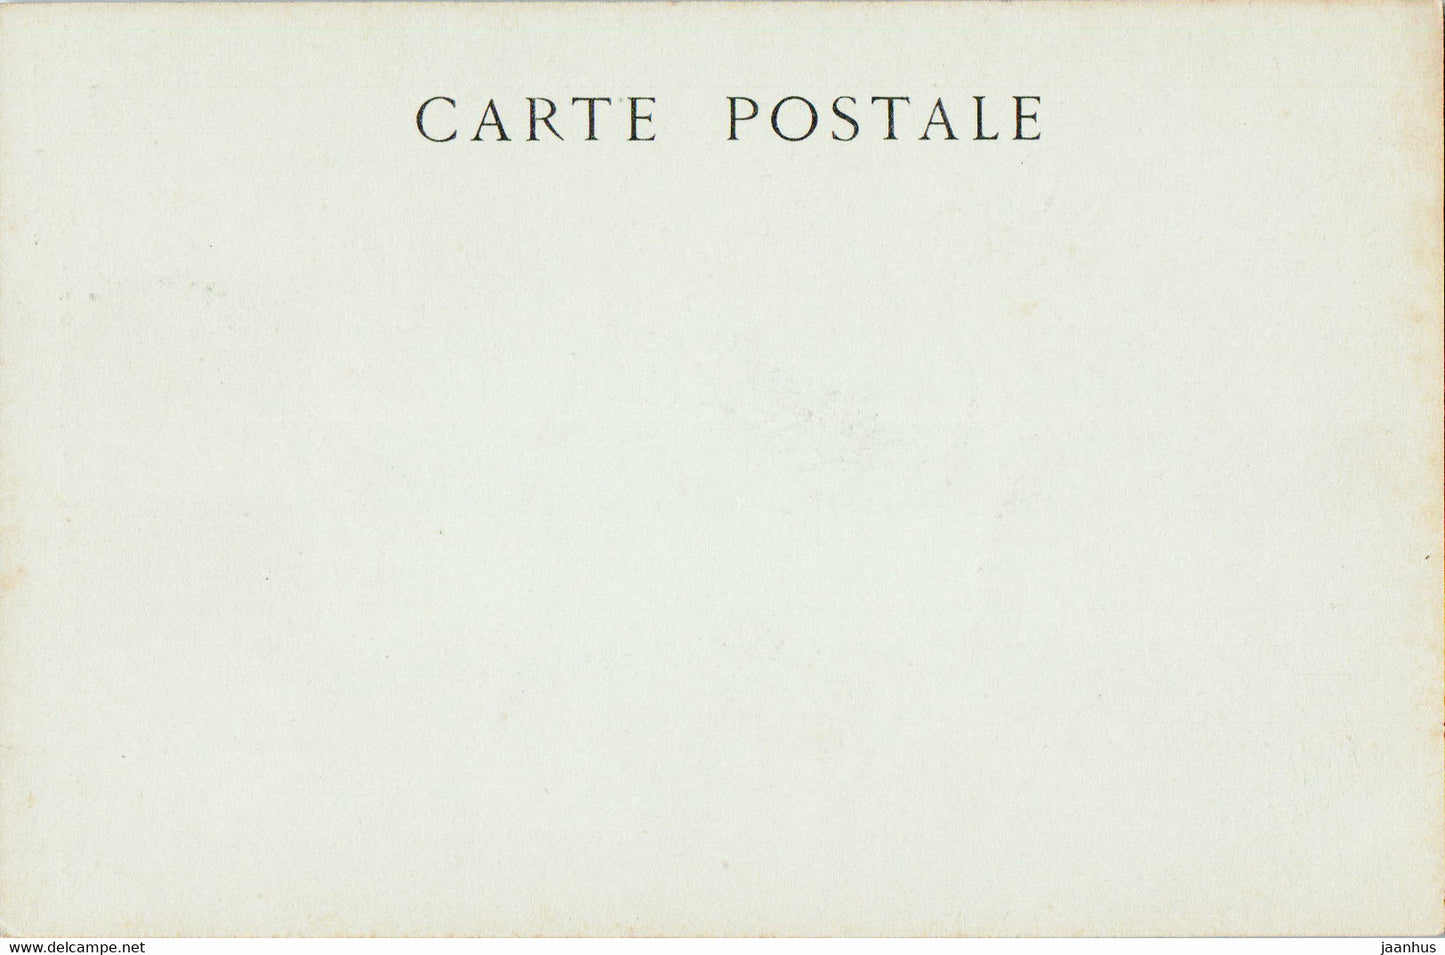 Foret de Fontainebleau - Rocher Cuvier Chatillon l'Aerolithe - 129 - alte Postkarte - Frankreich - unbenutzt